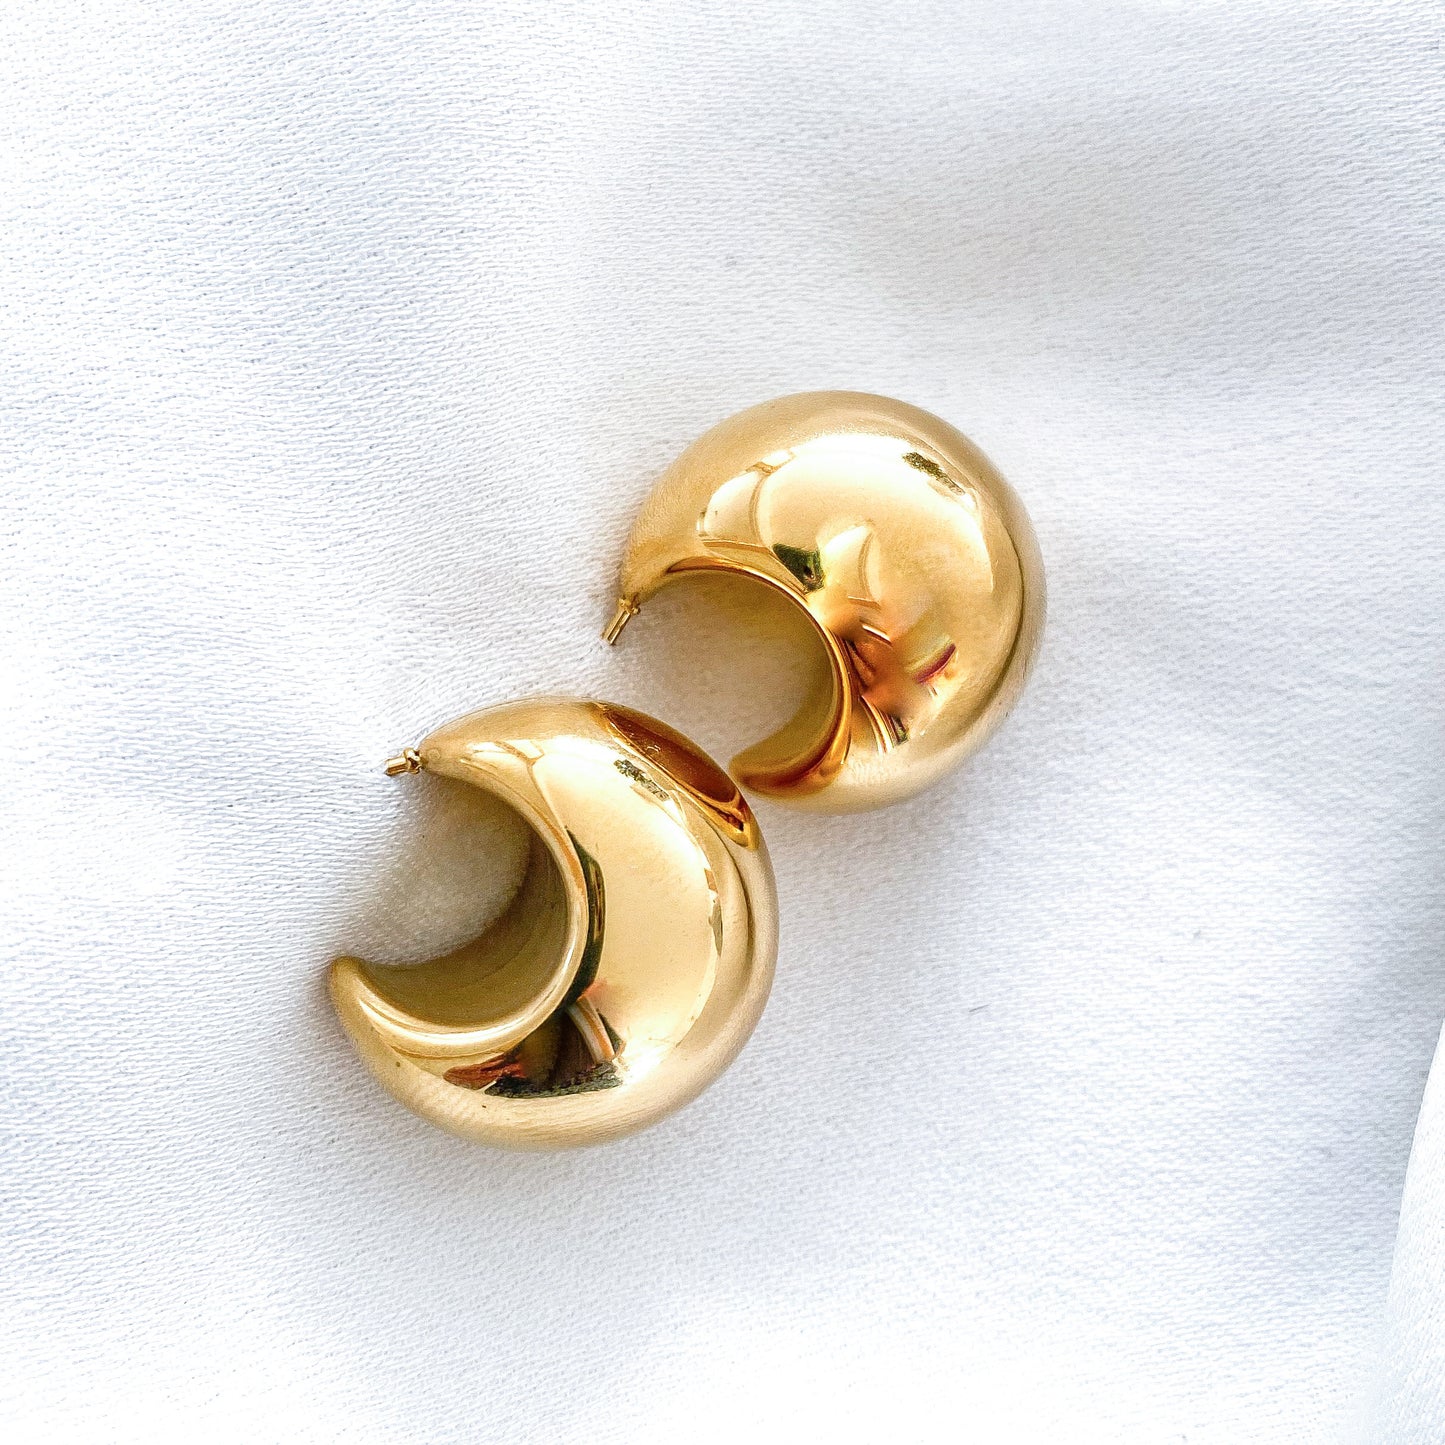 Chunky Gold Dome Earrings